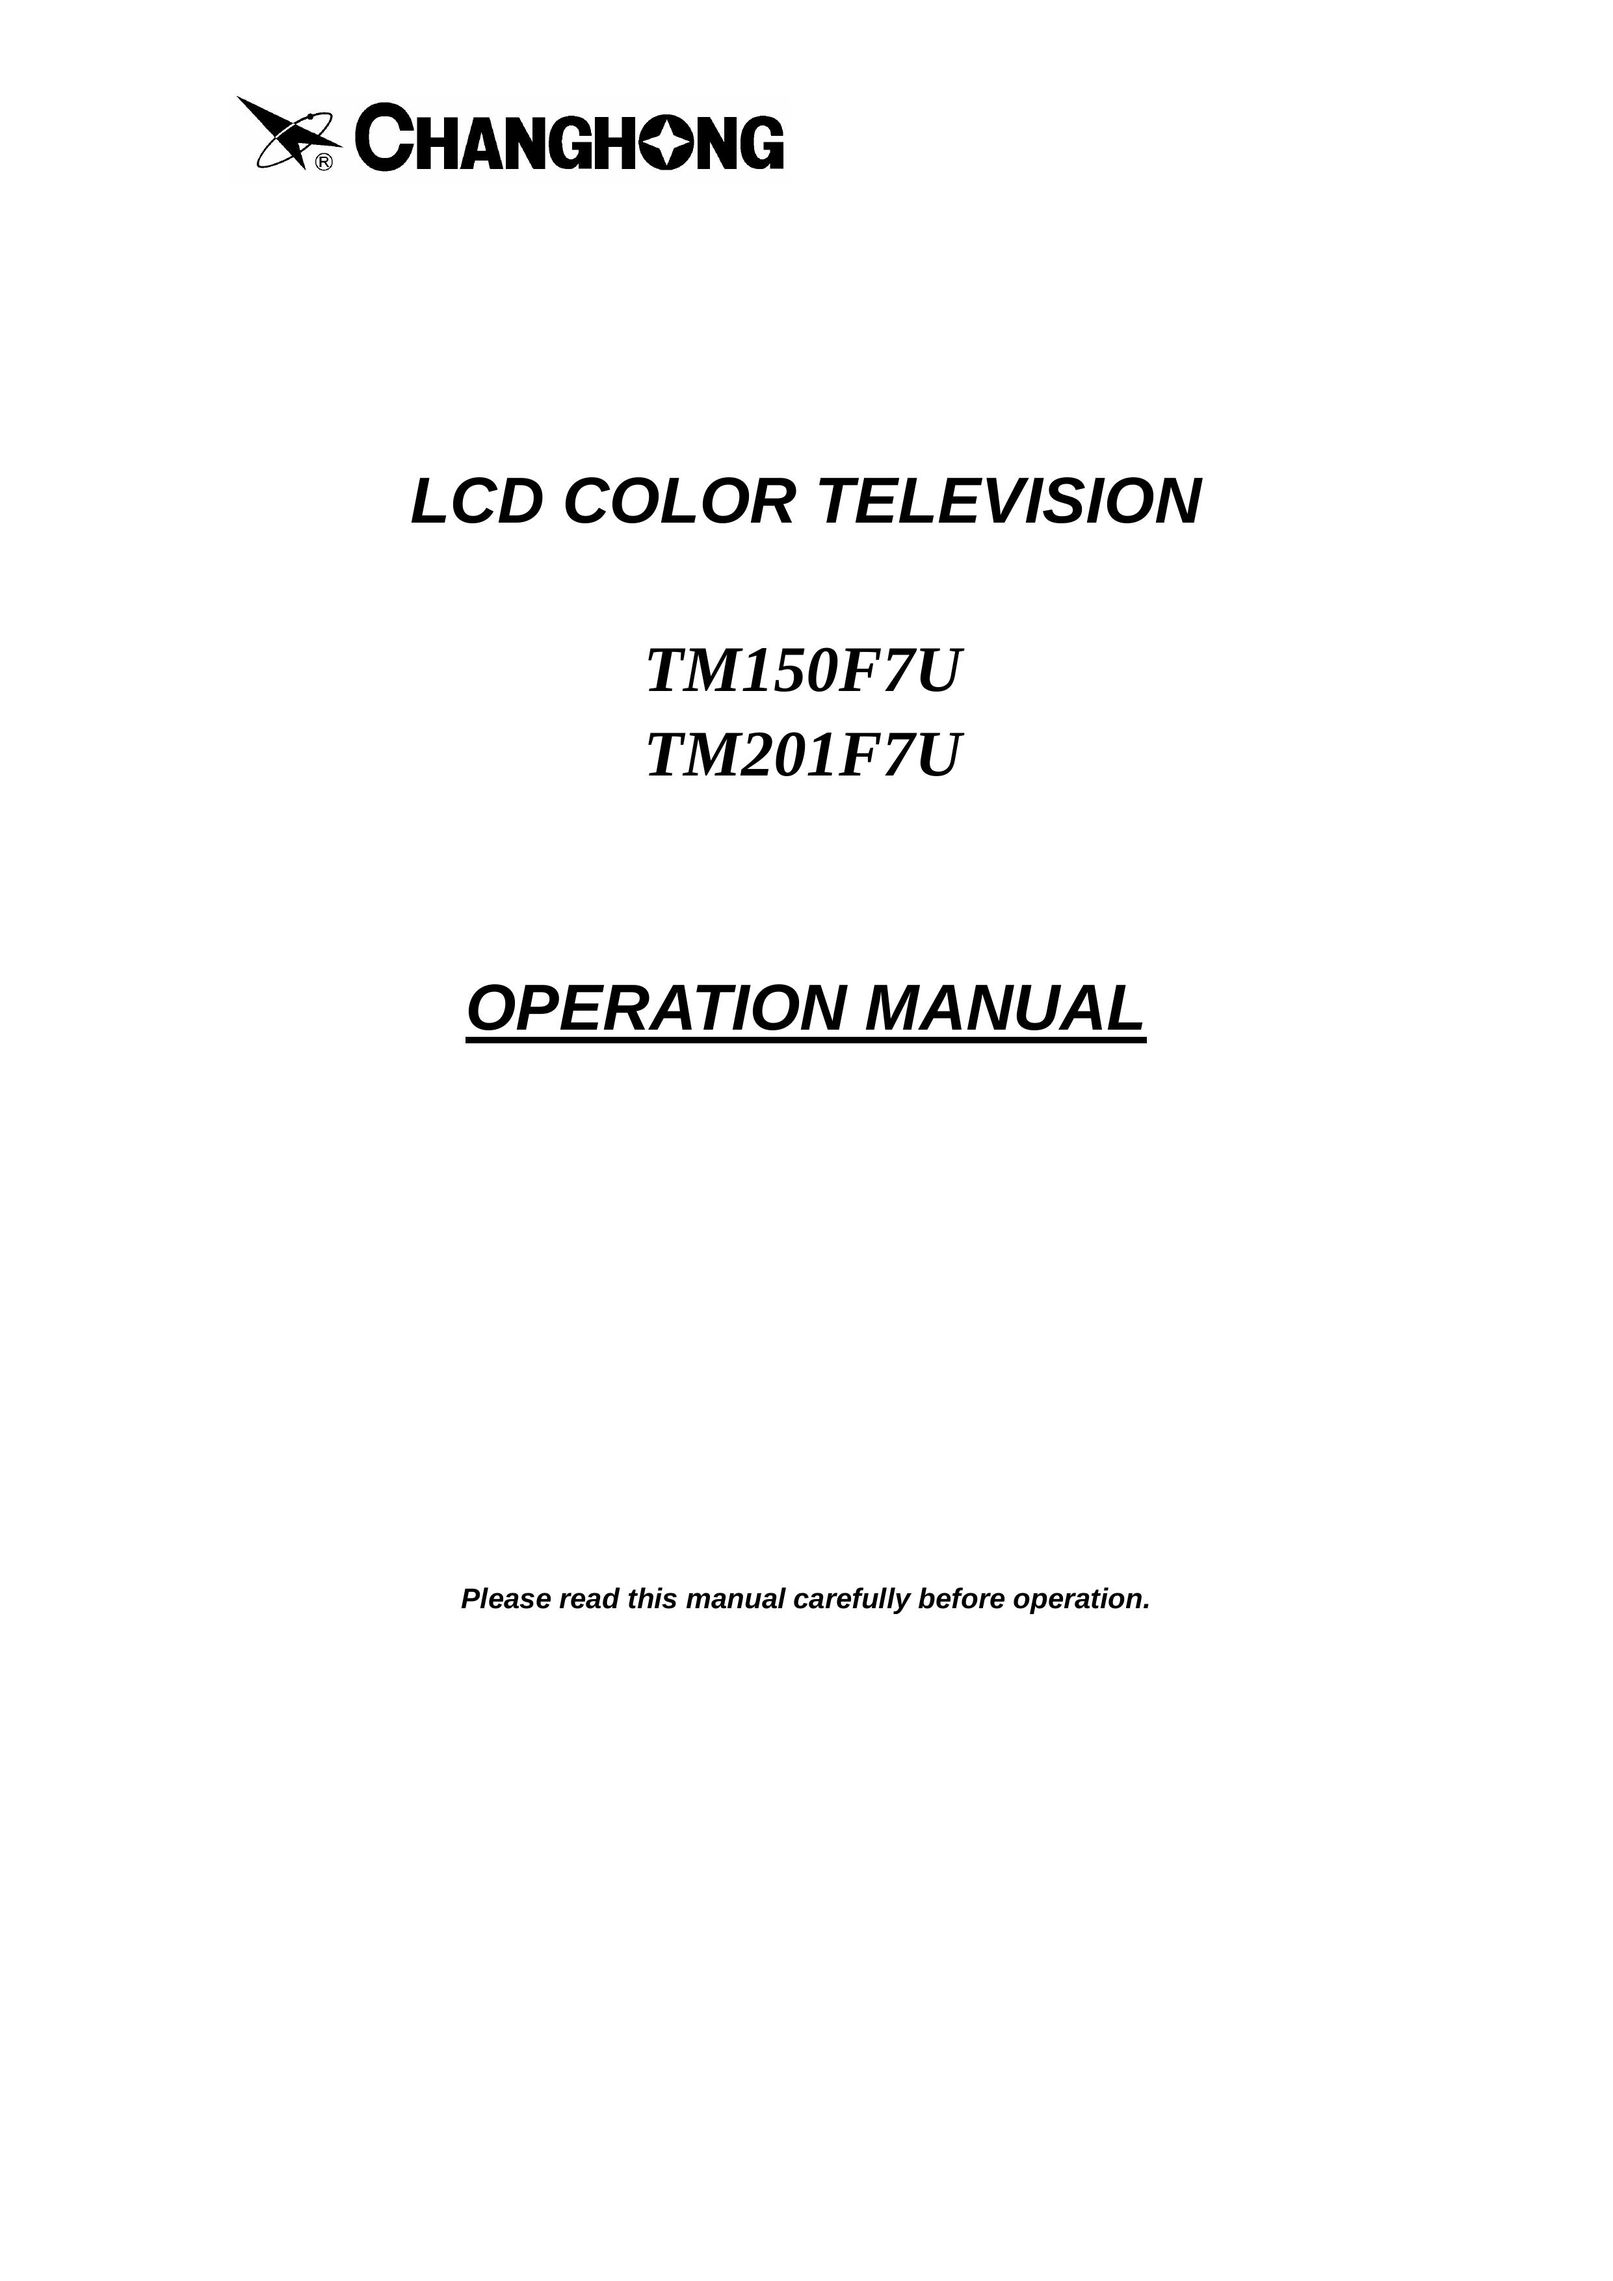 Changhong Electric TM201F7U, TM150F7U Flat Panel Television User Manual